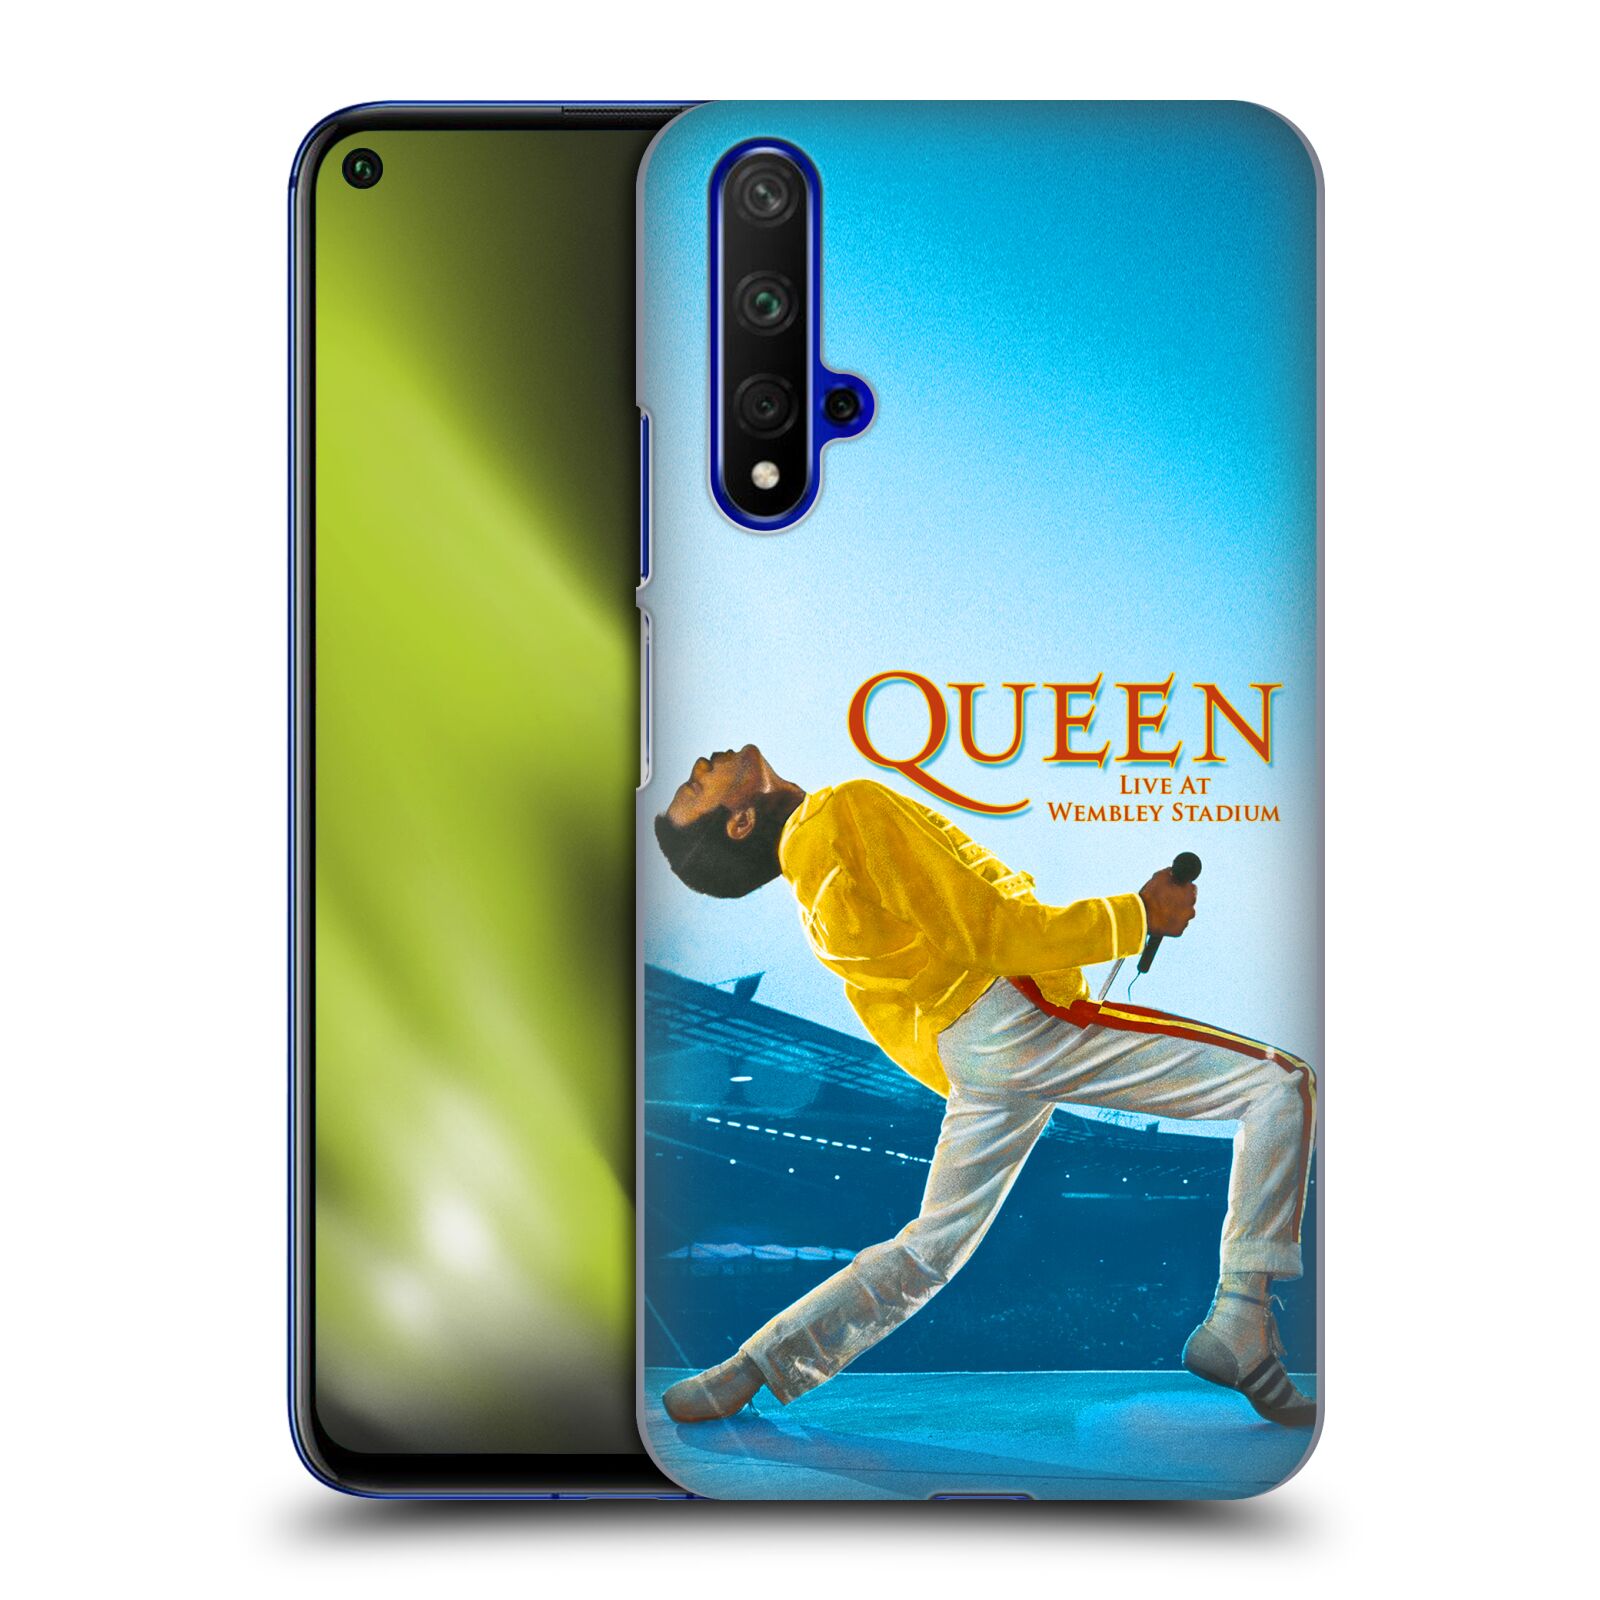 Pouzdro na mobil Honor 20 - HEAD CASE - zpěvák Queen skupina Freddie Mercury